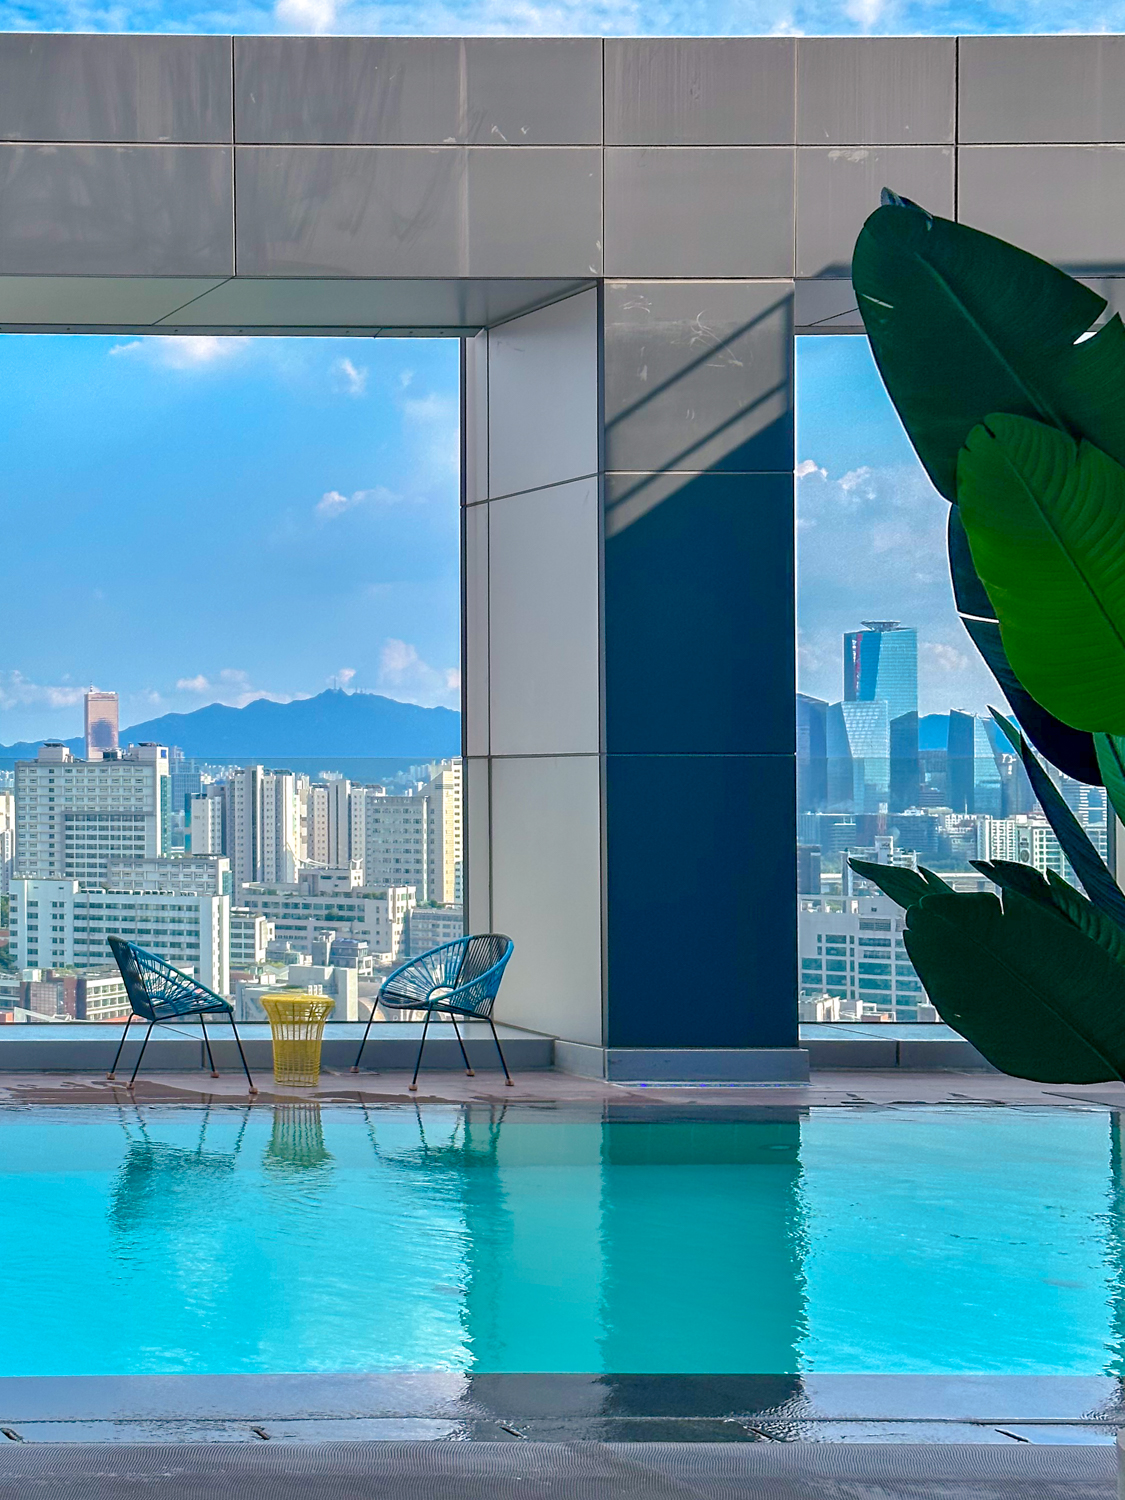 L7 홍대 호텔 22층 루프탑 수영장